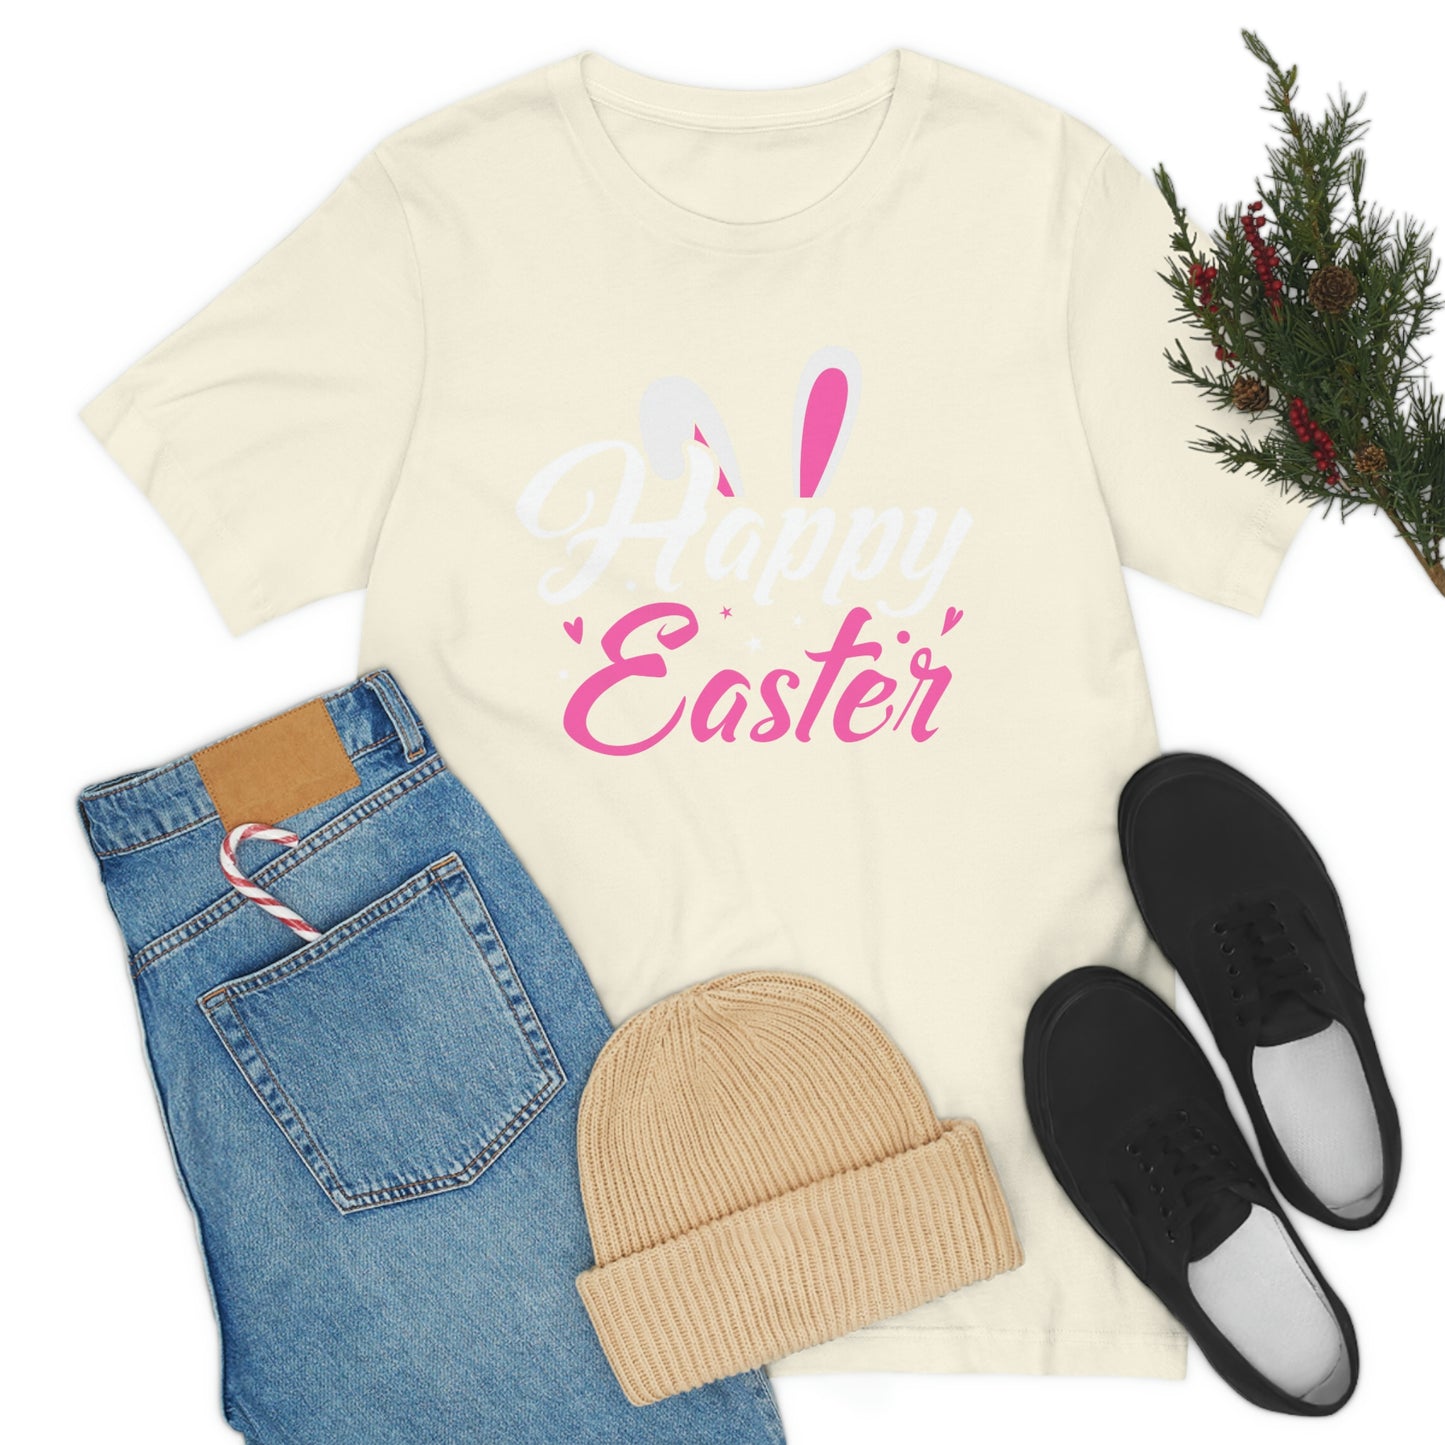 Happy Easter Bunny Ears Unisex Jersey Short Sleeve Tee